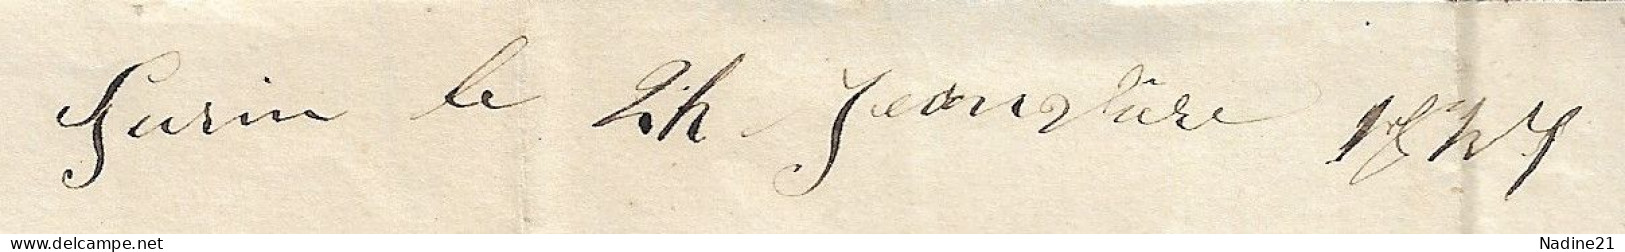 1847. Lettre. Avec Corresp. 1847 Tampon Turin (TORINO 25 GENN.) à Dest. FRANCE - Taxe 8 De Port Payé - Sin Clasificación